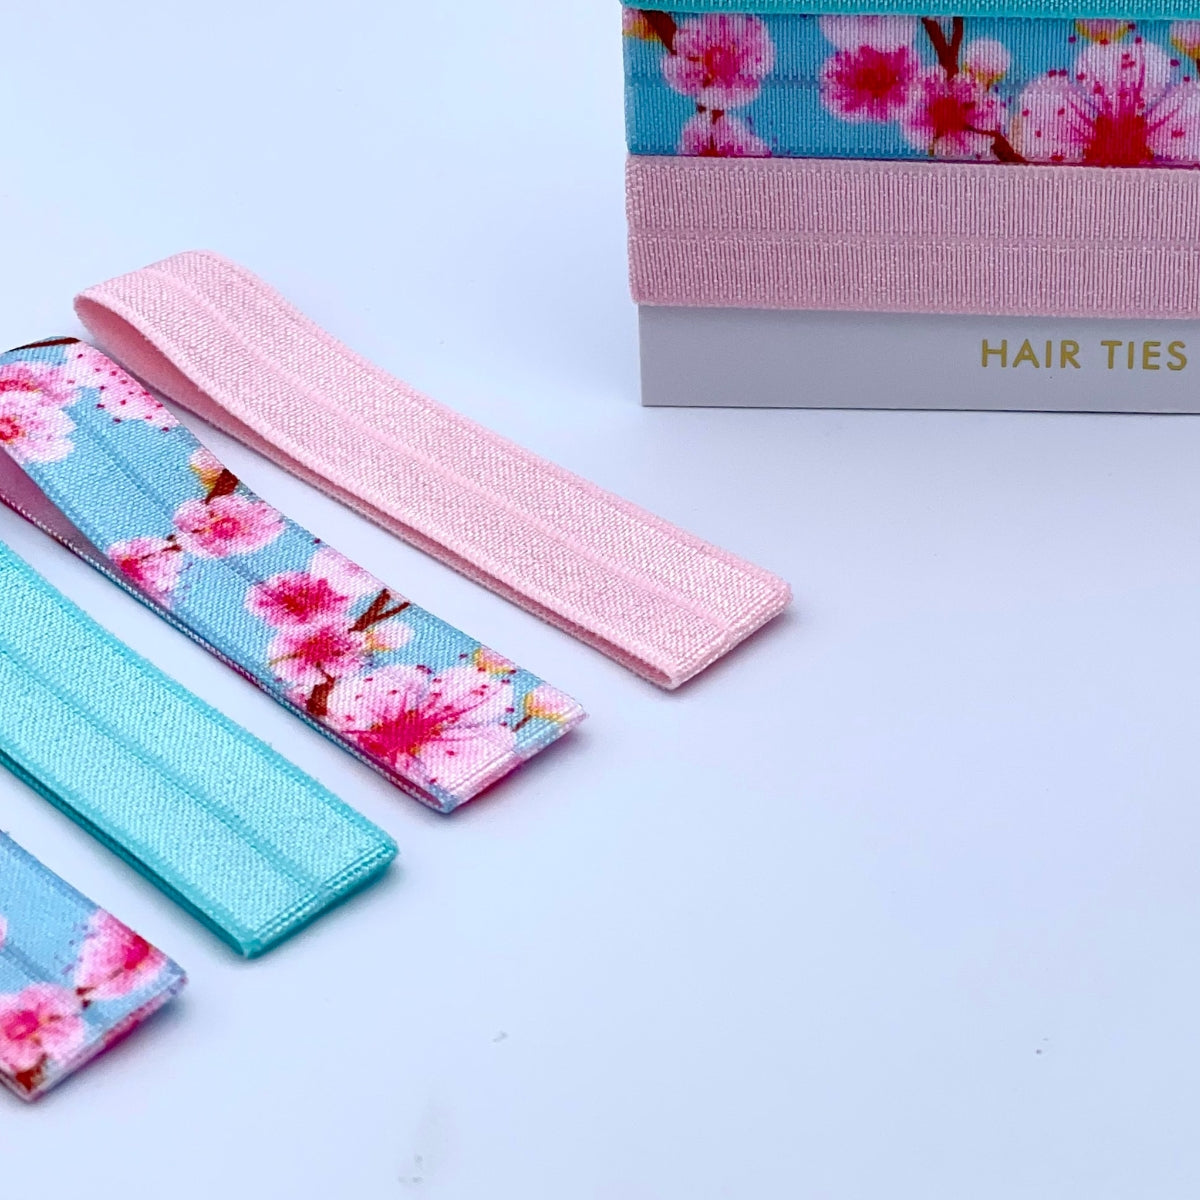 Hair Ties Set - Cherry Blossom Print